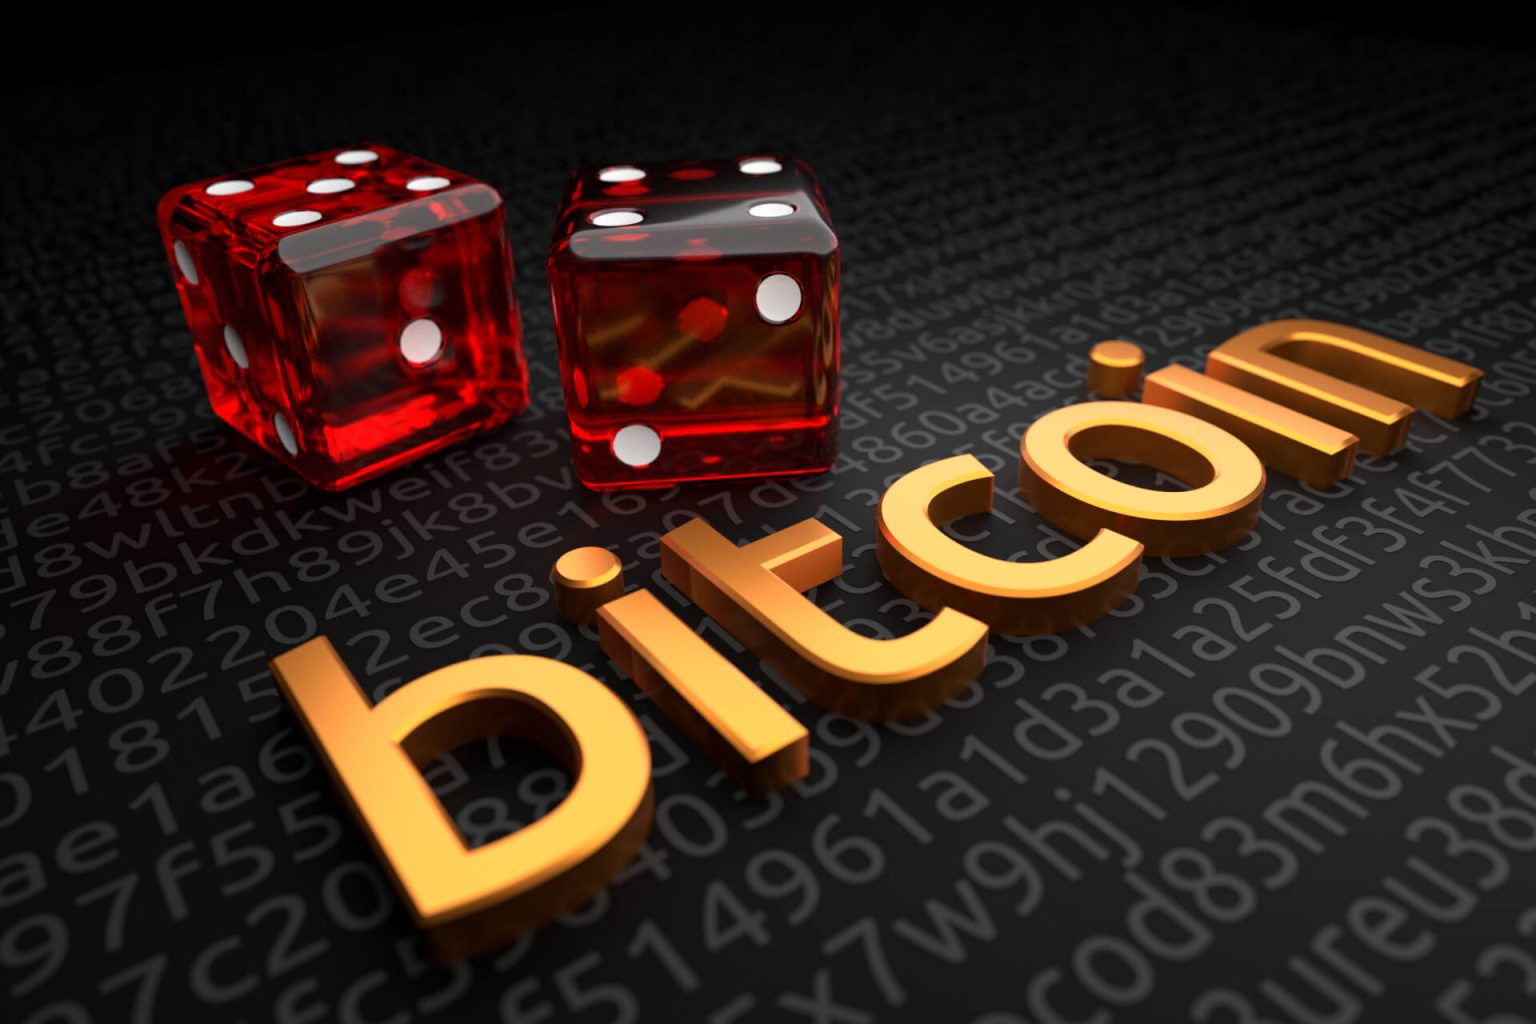 bitcoin dice invest